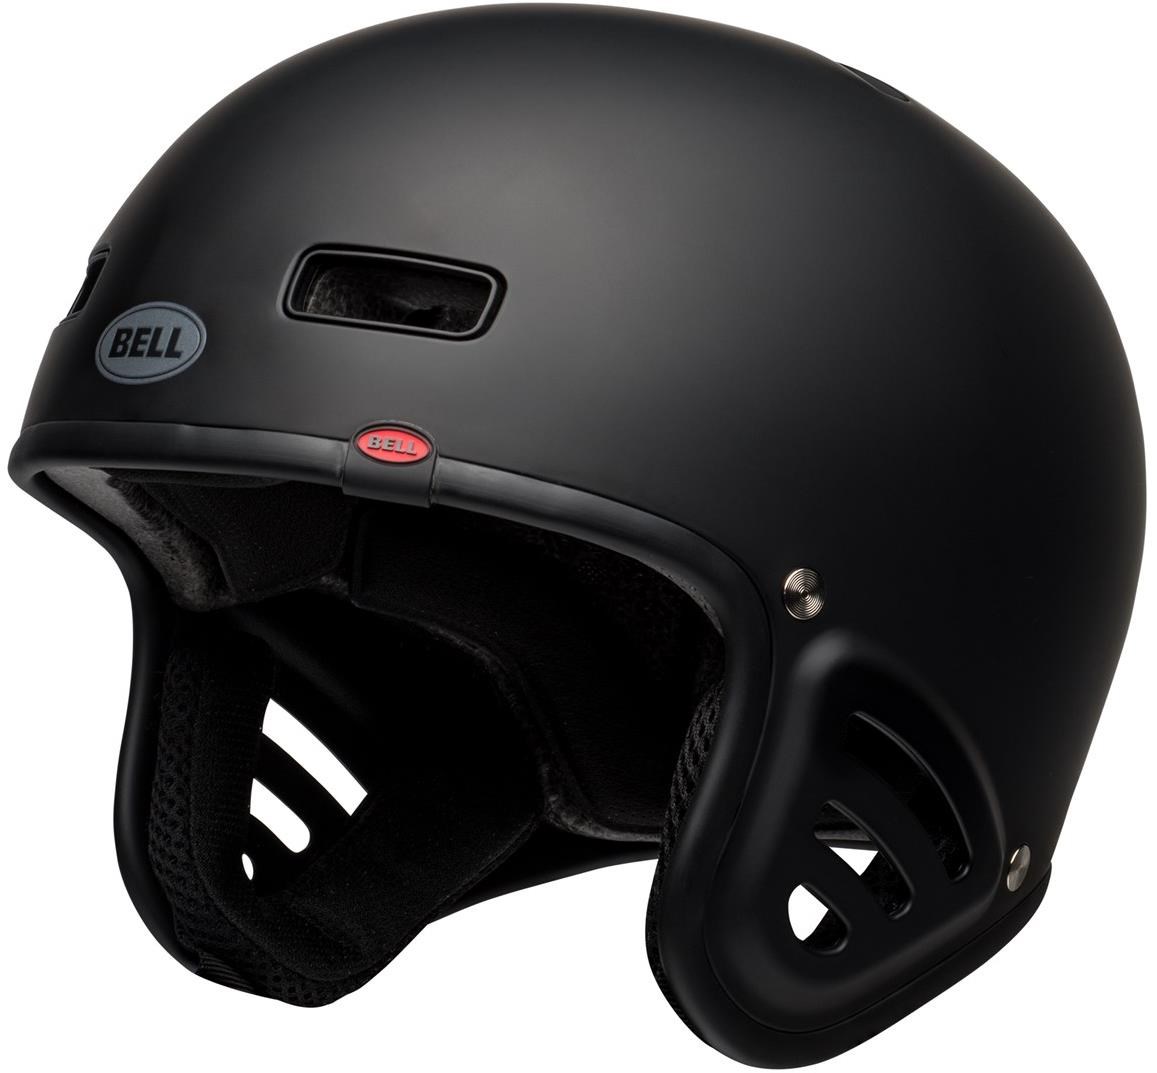 Bell Racket Helmet product image